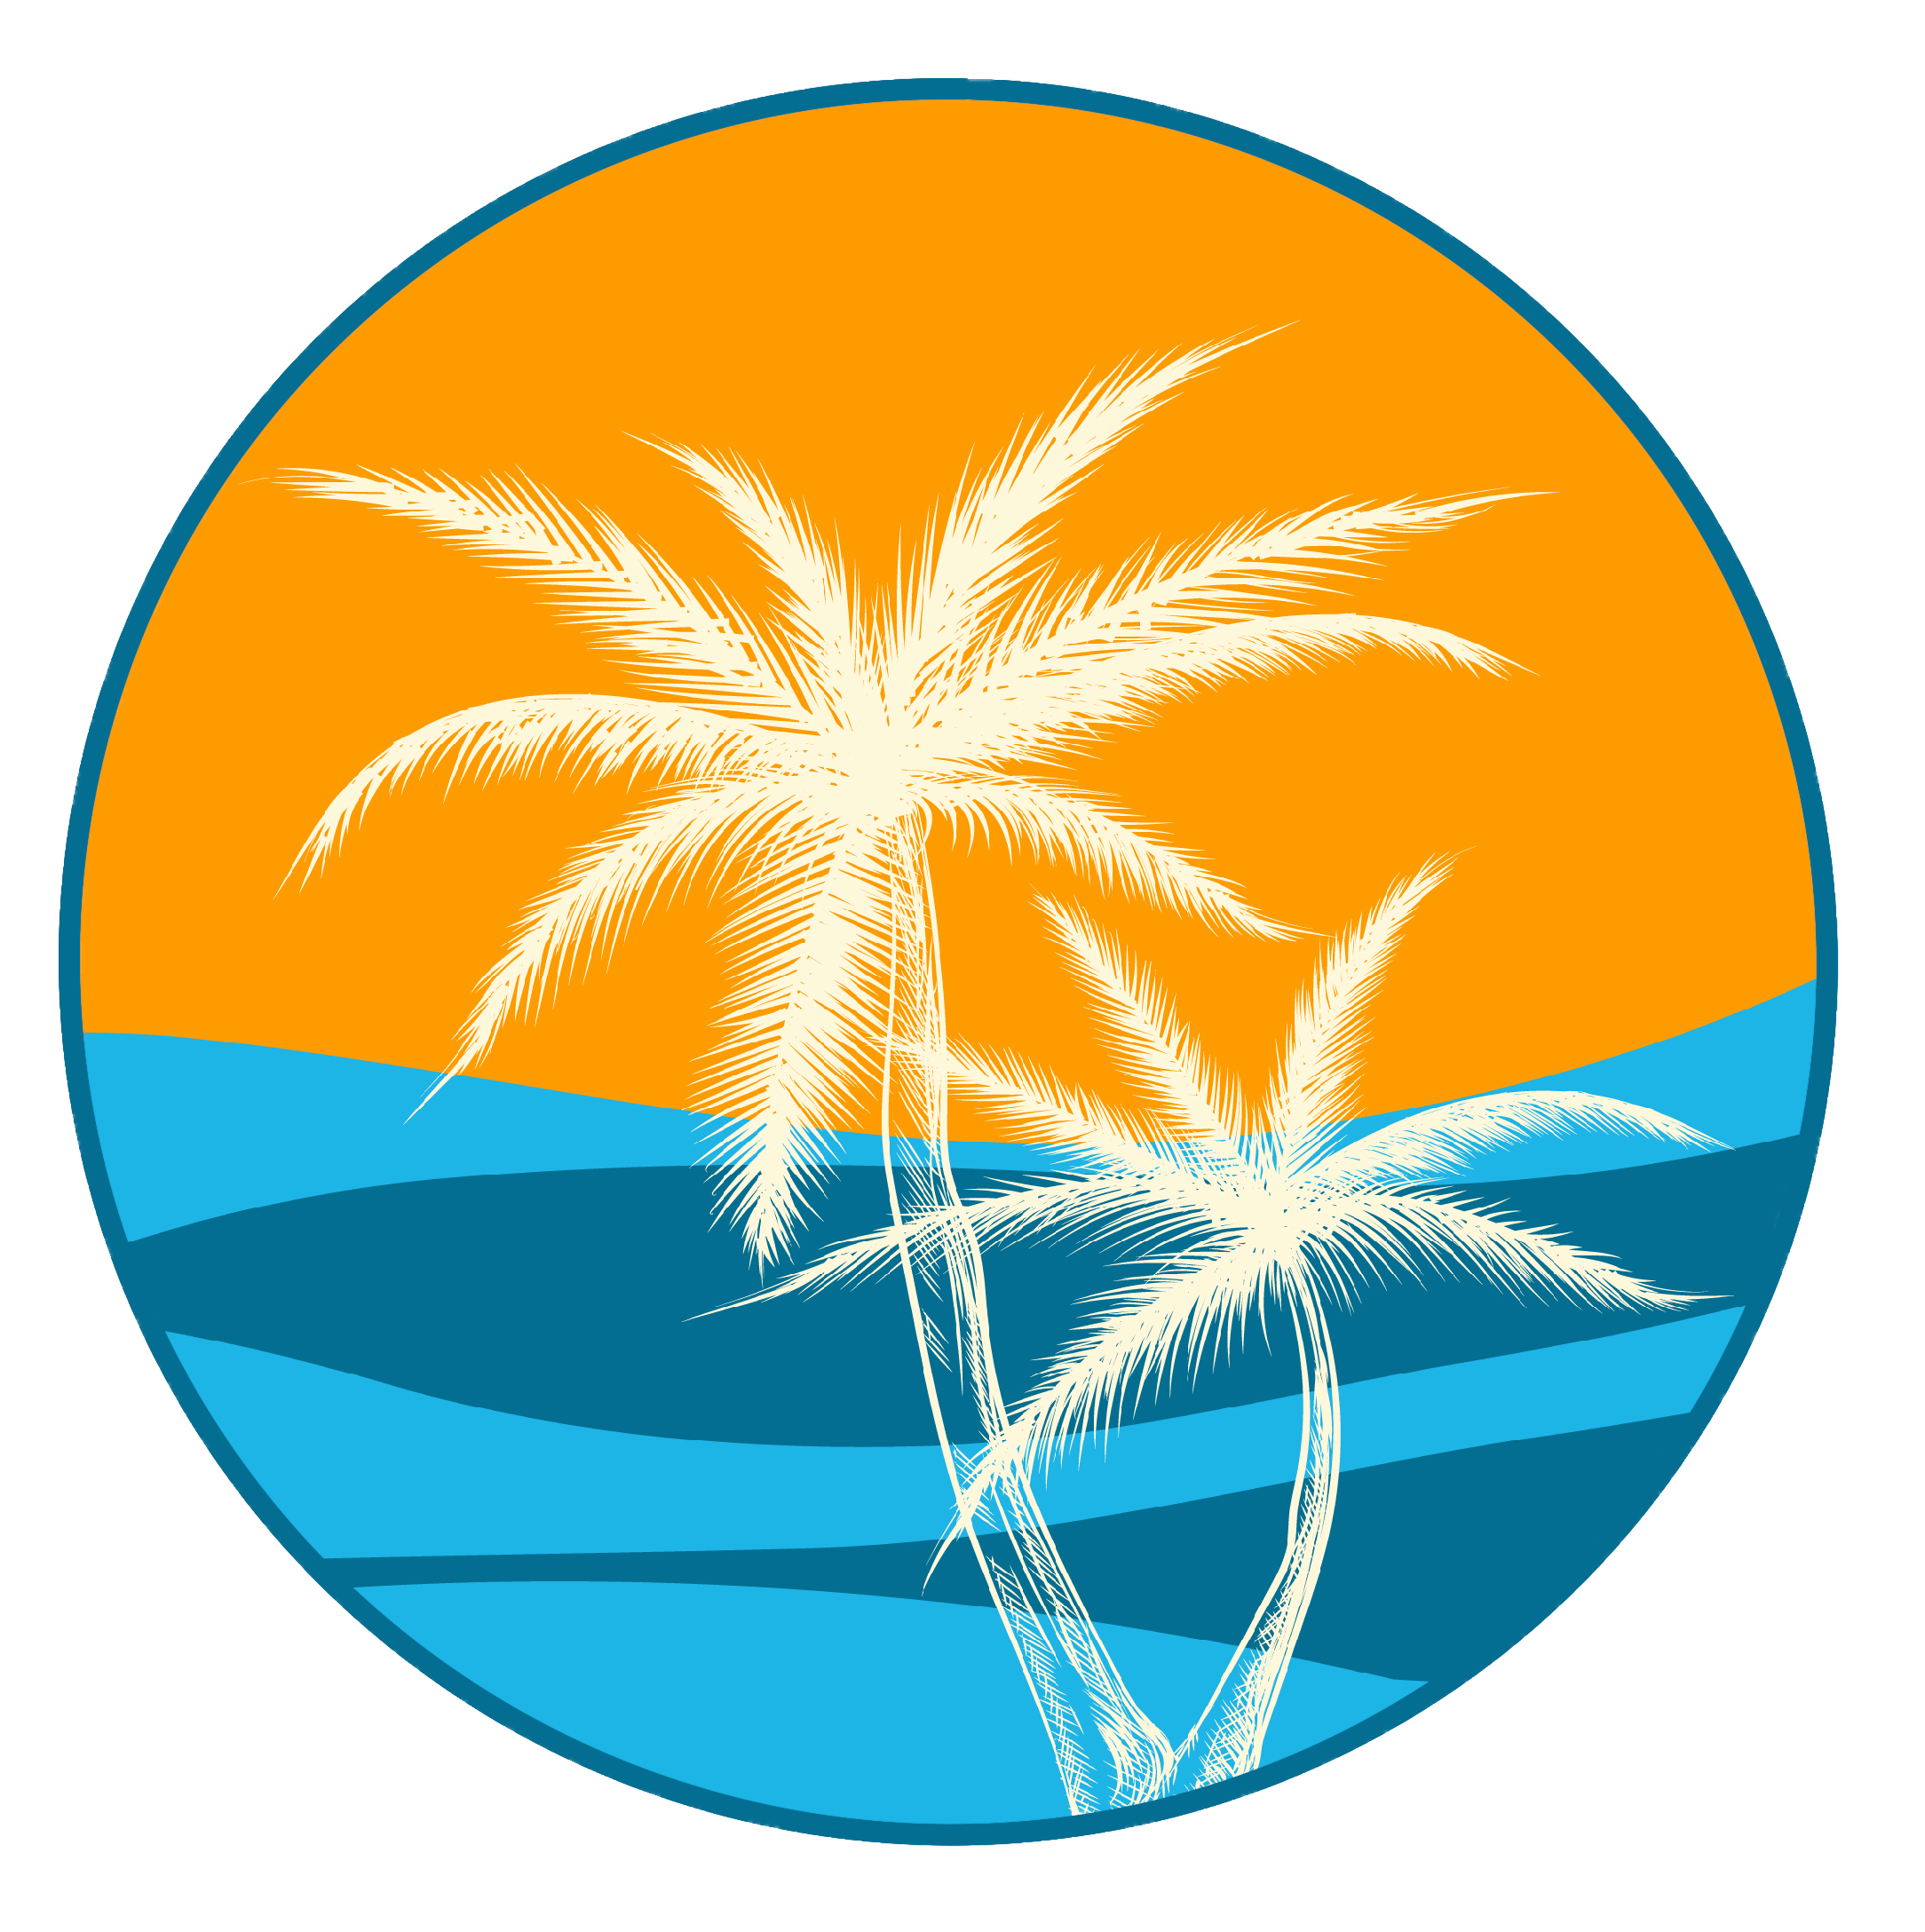 Sunspotter Logo - Palm trees against a setting sun